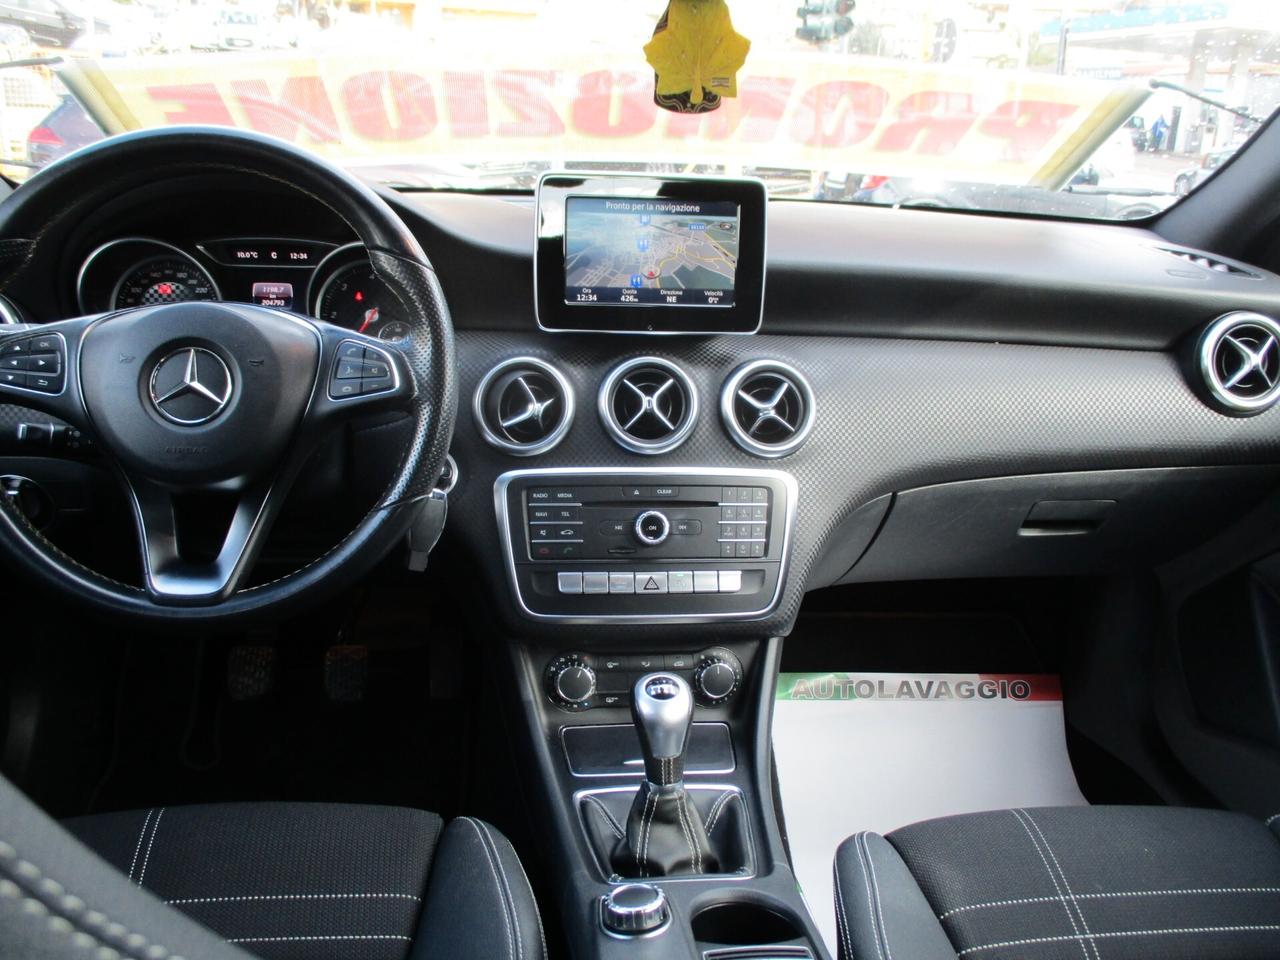 Mercedes-benz A 200 CDI FULL OPT (NAVI,RETROCAMERA)